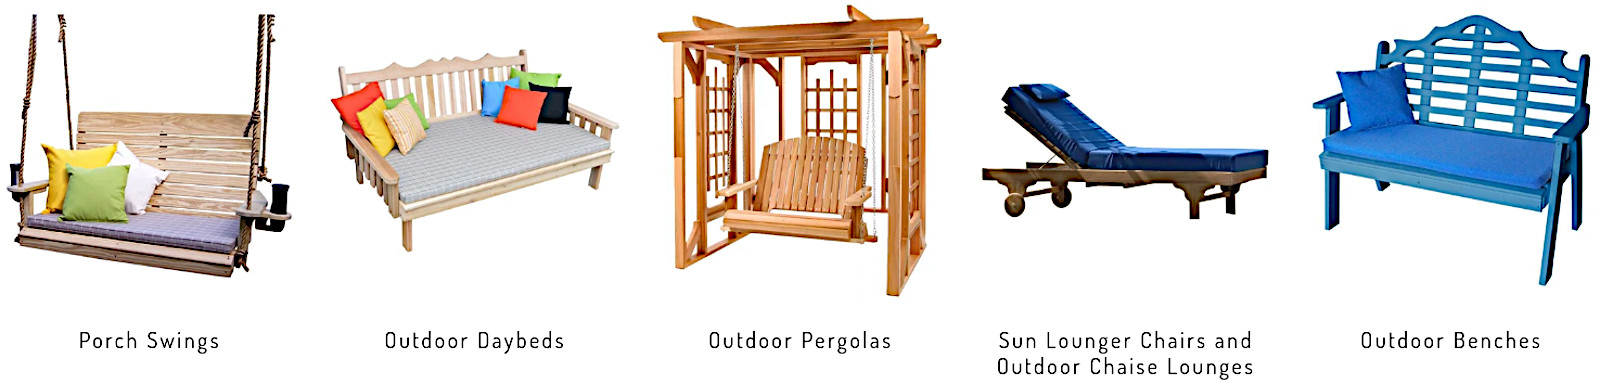 Deal outdoor furniture